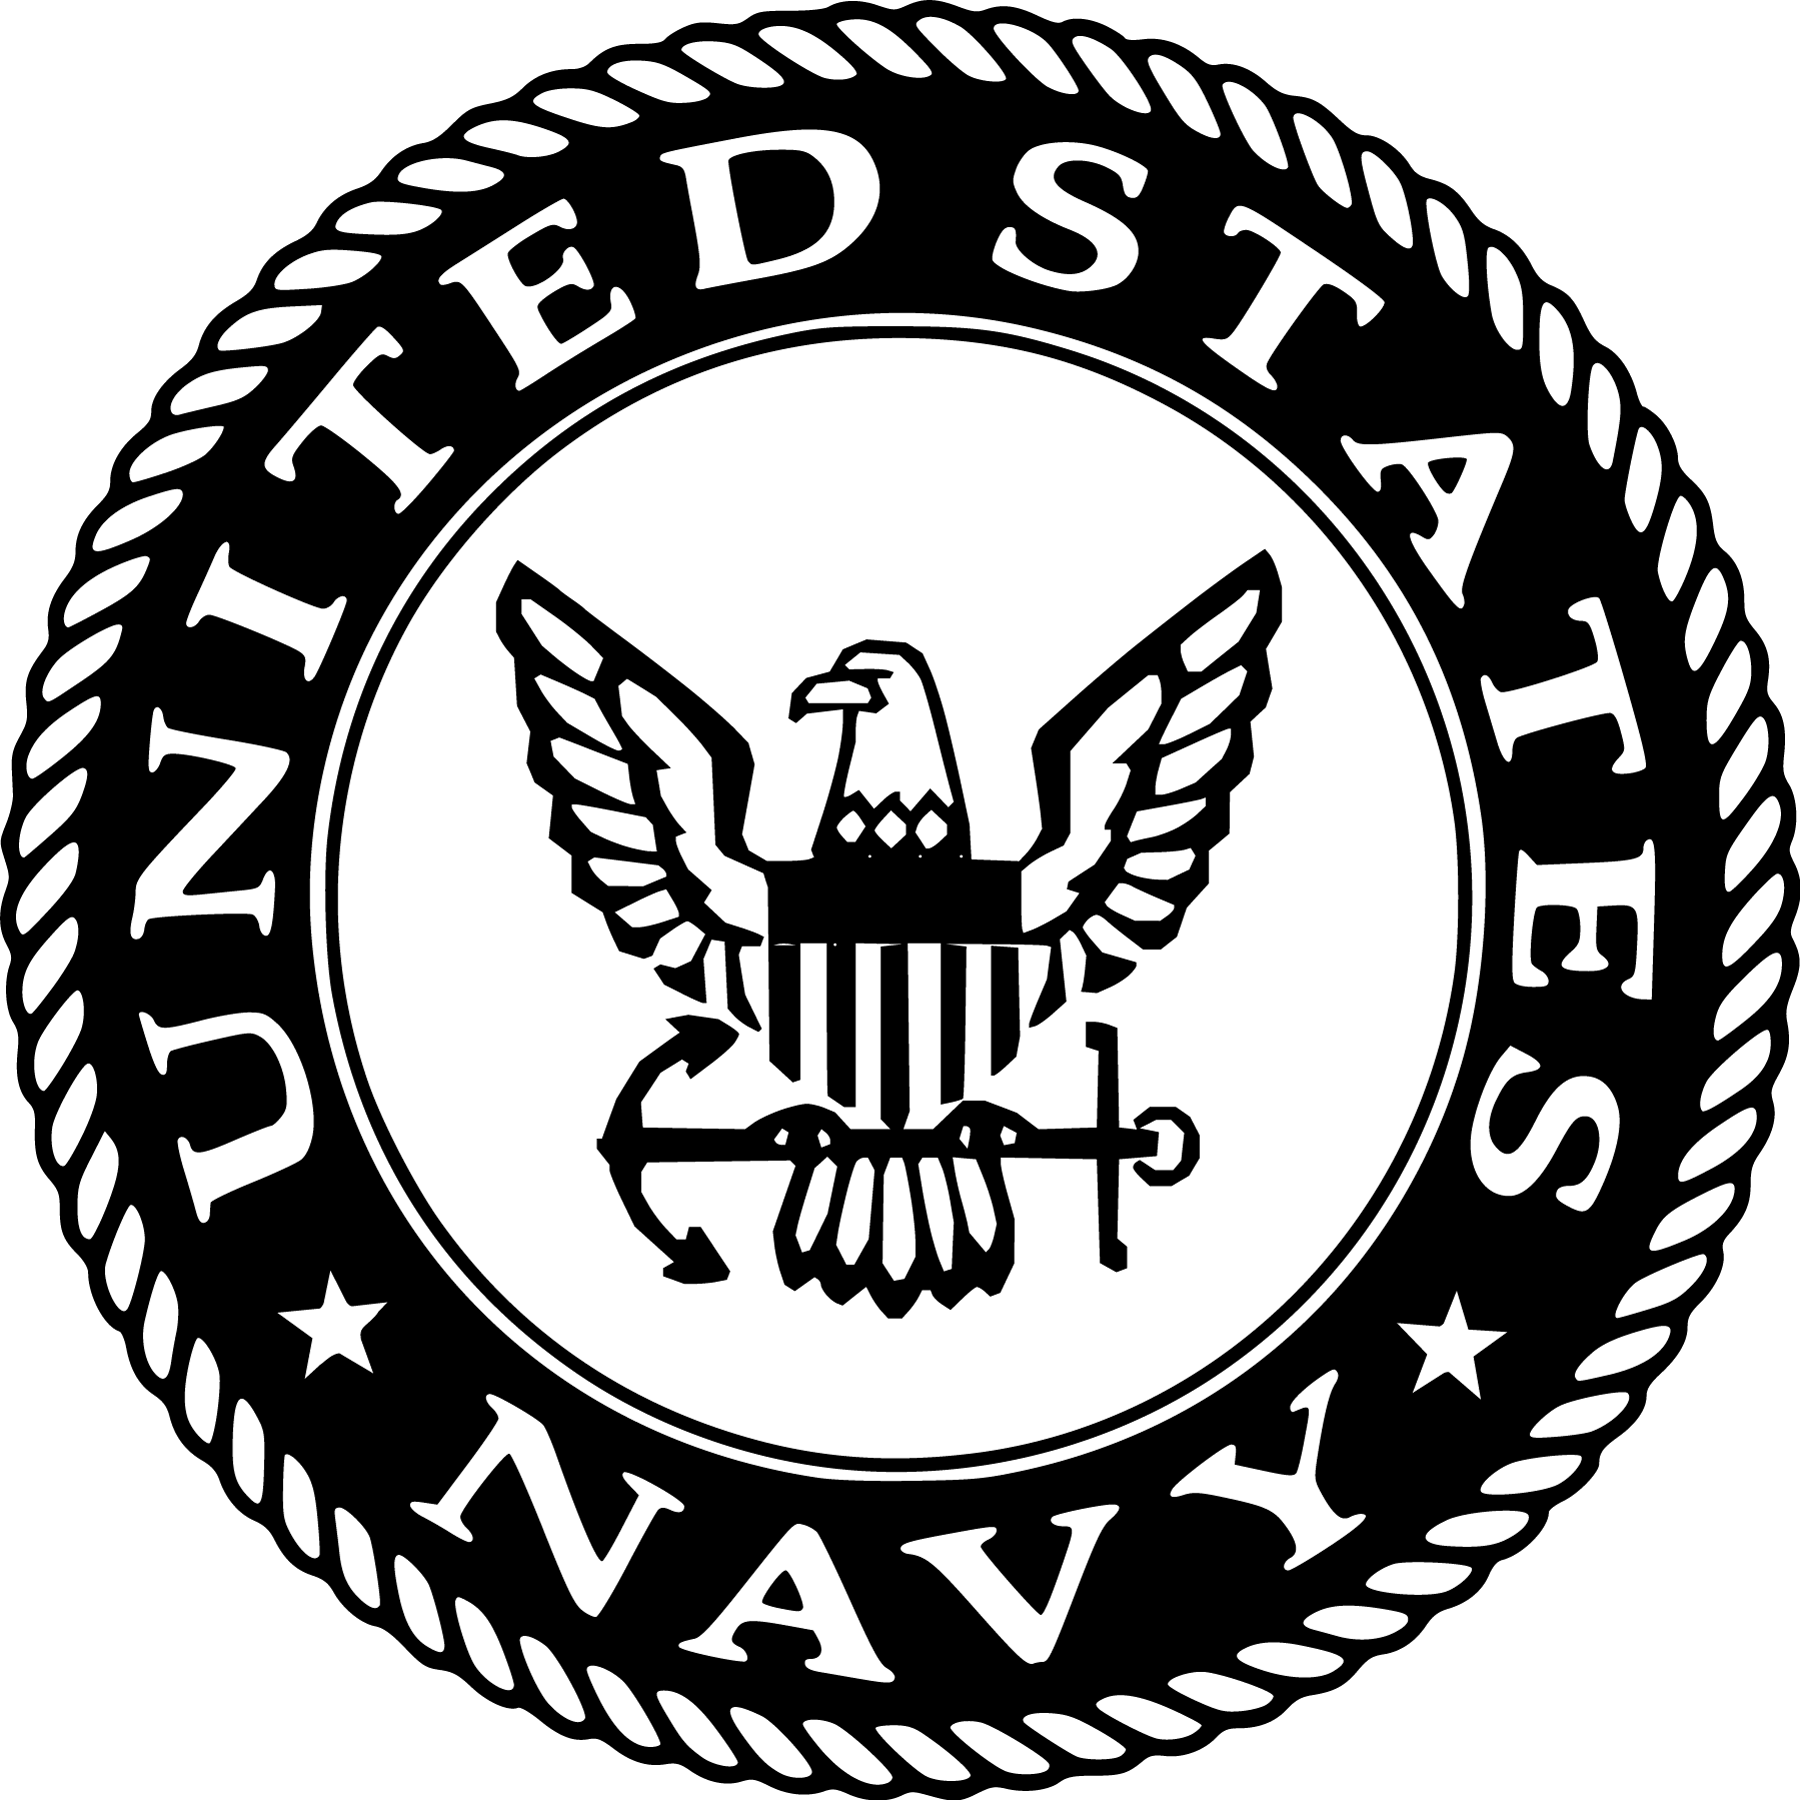 Black and White Vector Logo - Military Logos Vector, Navy, Air Force, Marines, Coast Guard